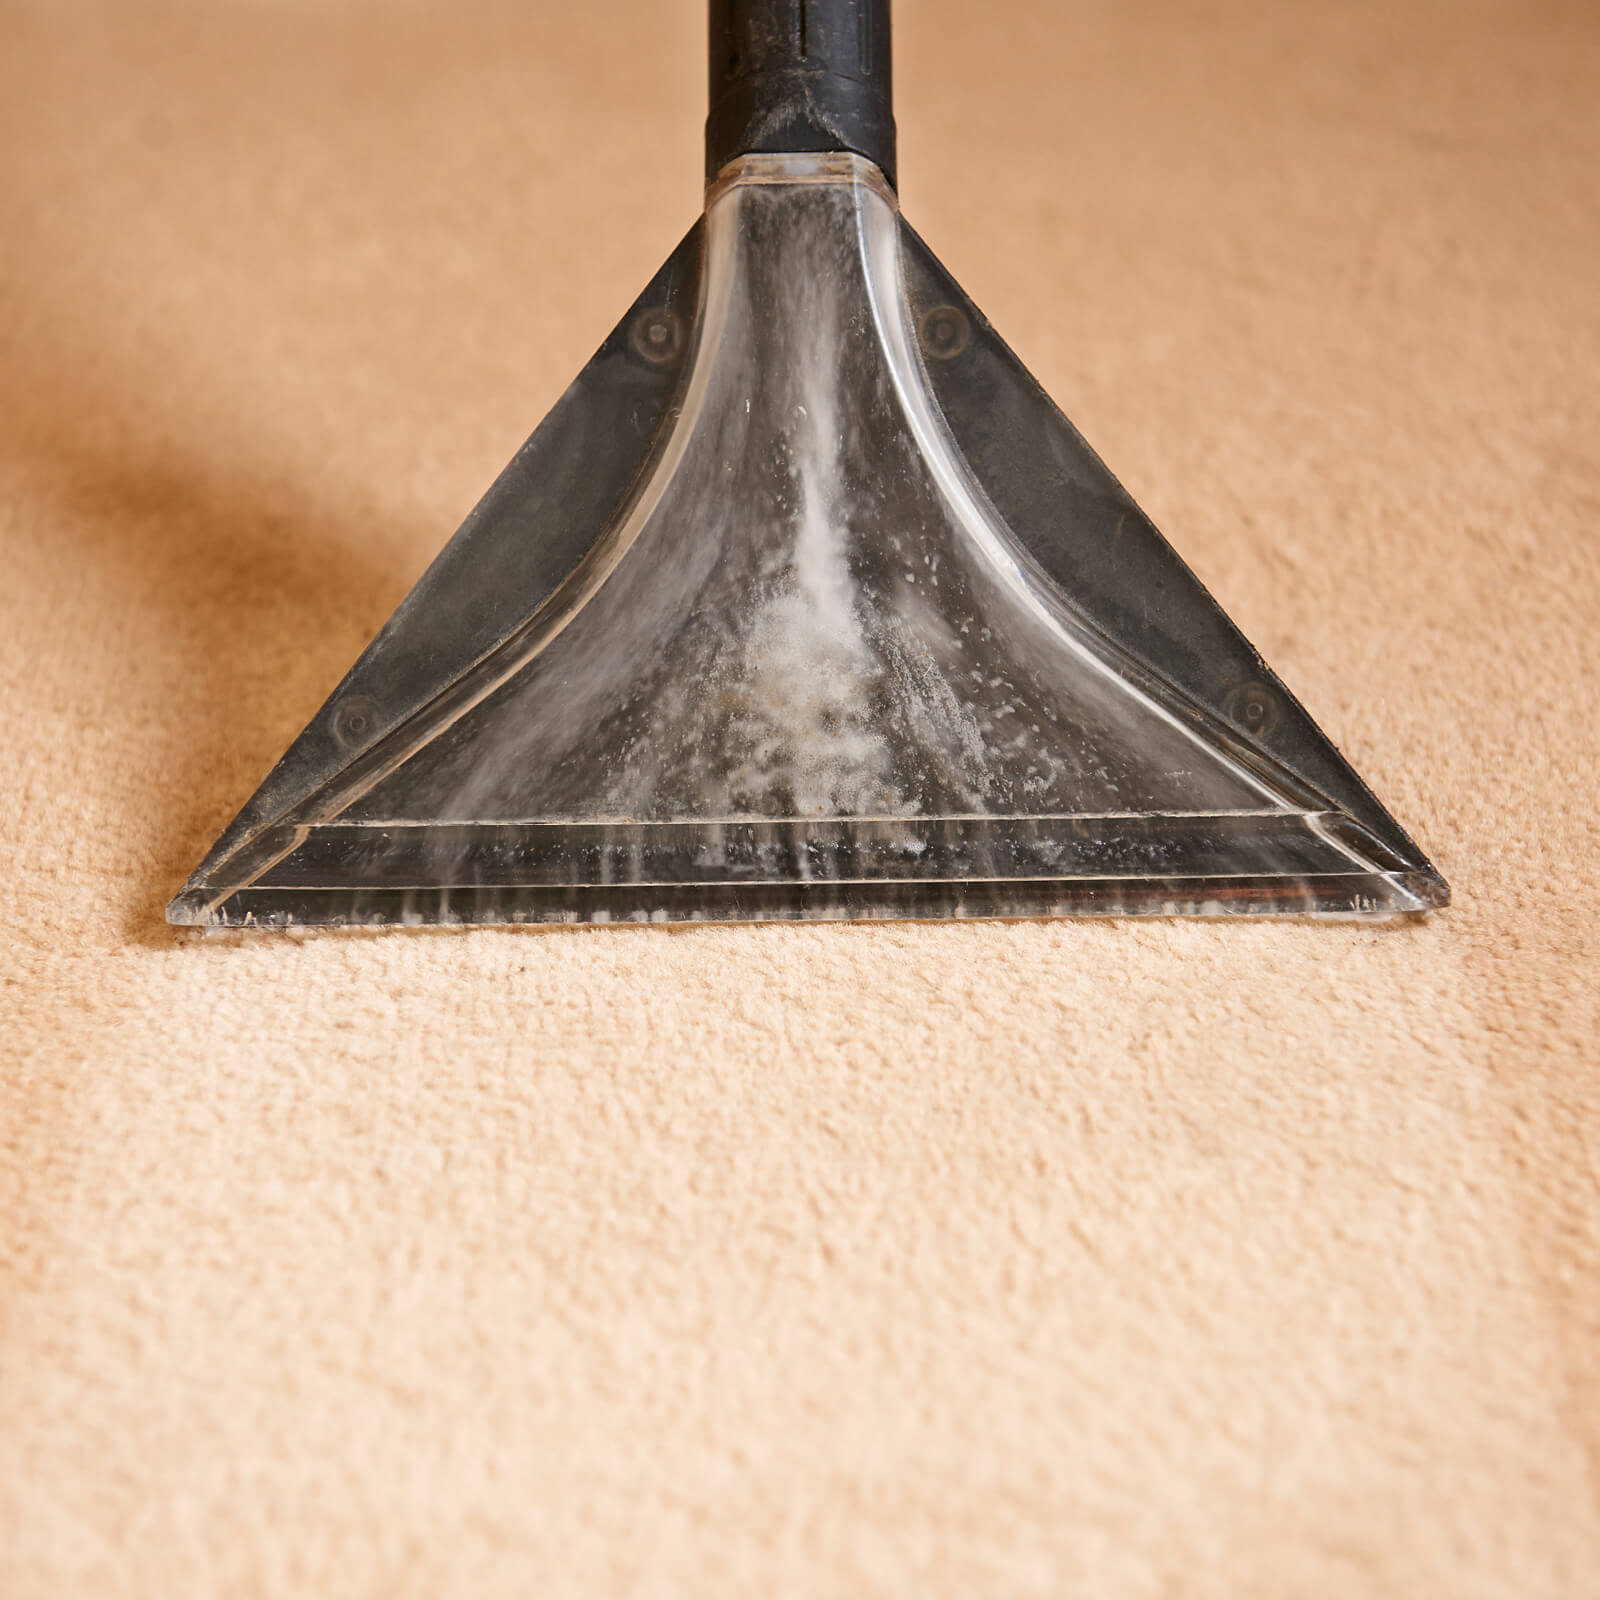 Carpet cleaning | Great Lakes Carpet & Tile